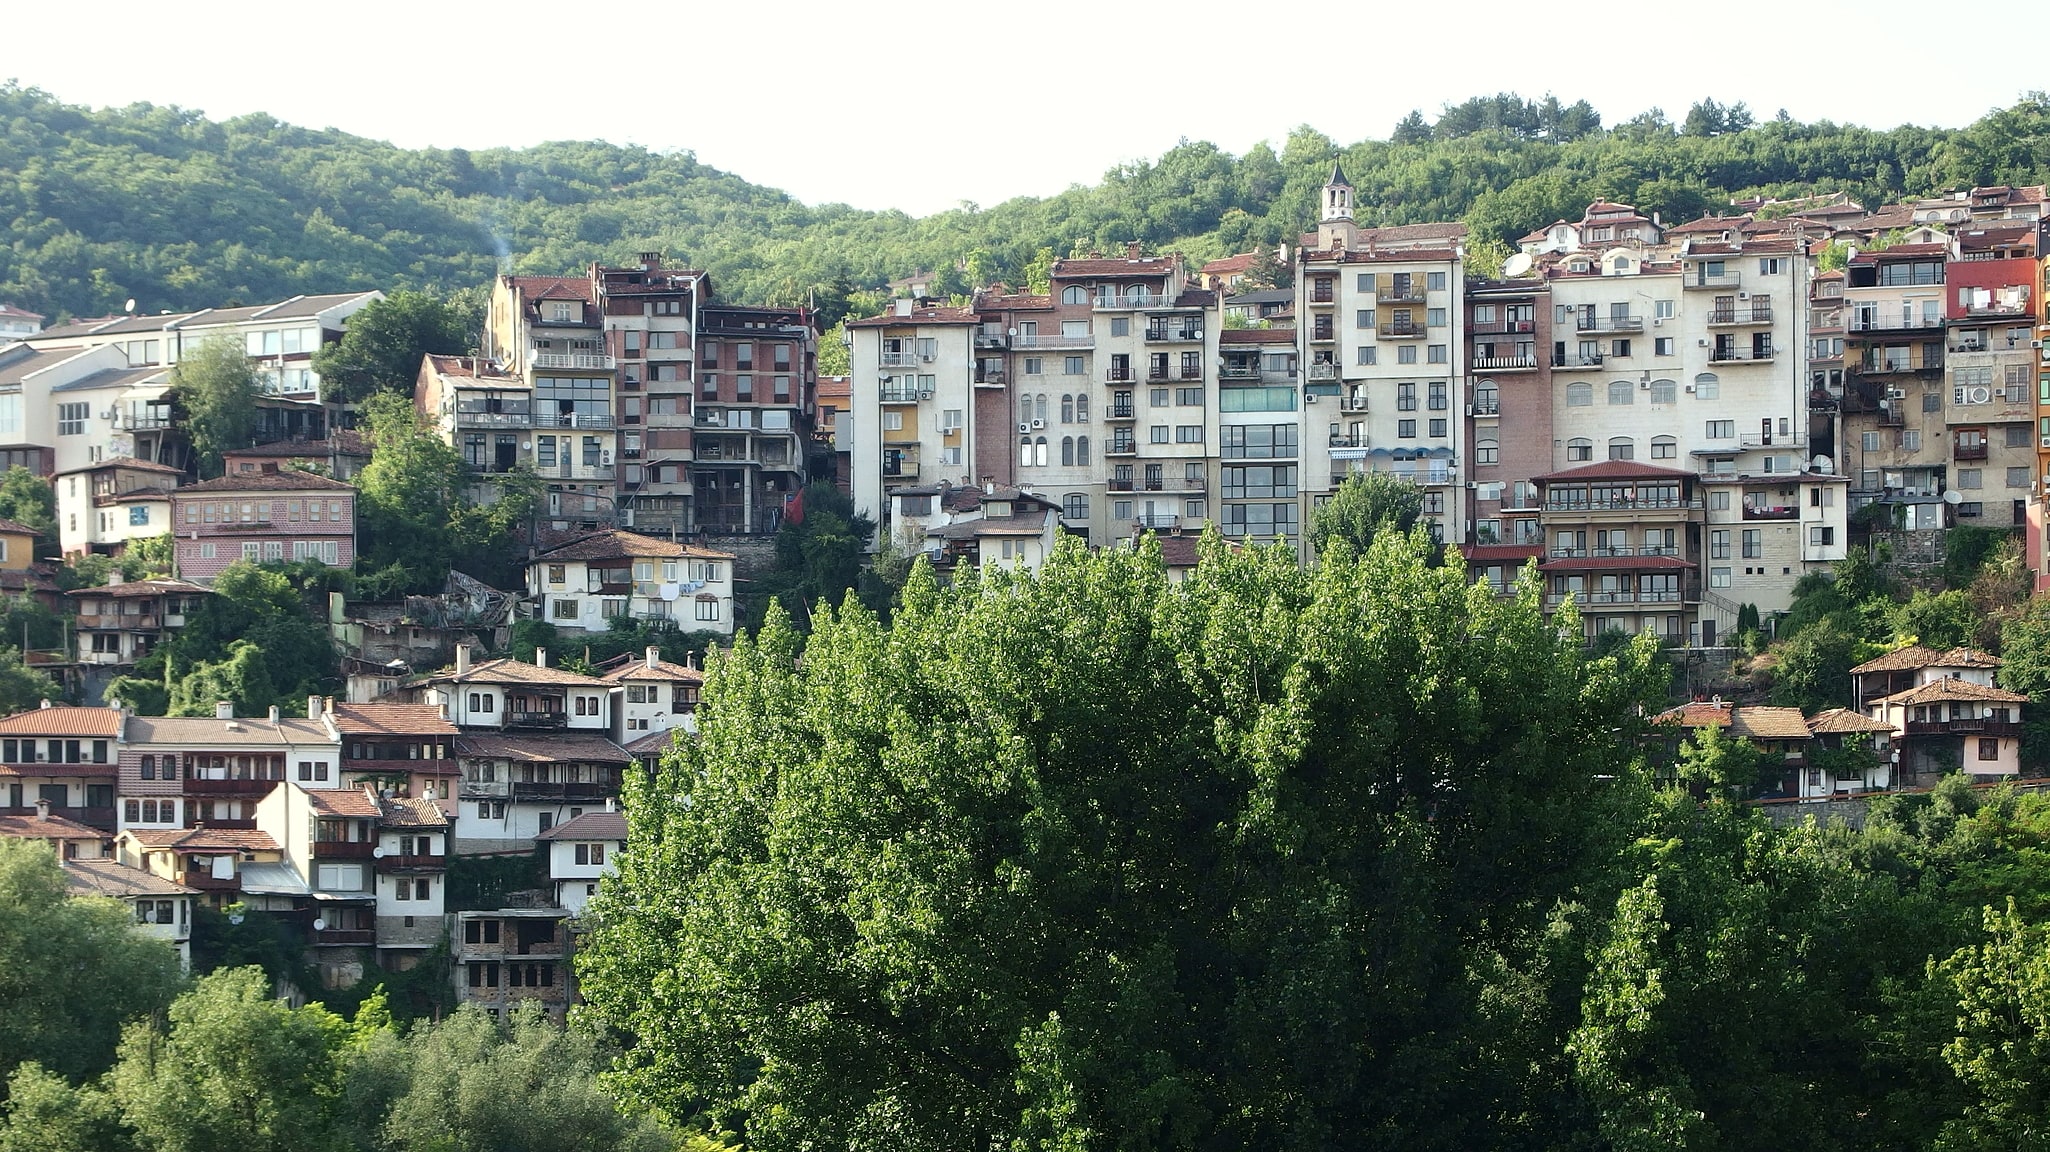 Weliko Tarnowo, Bulgarien